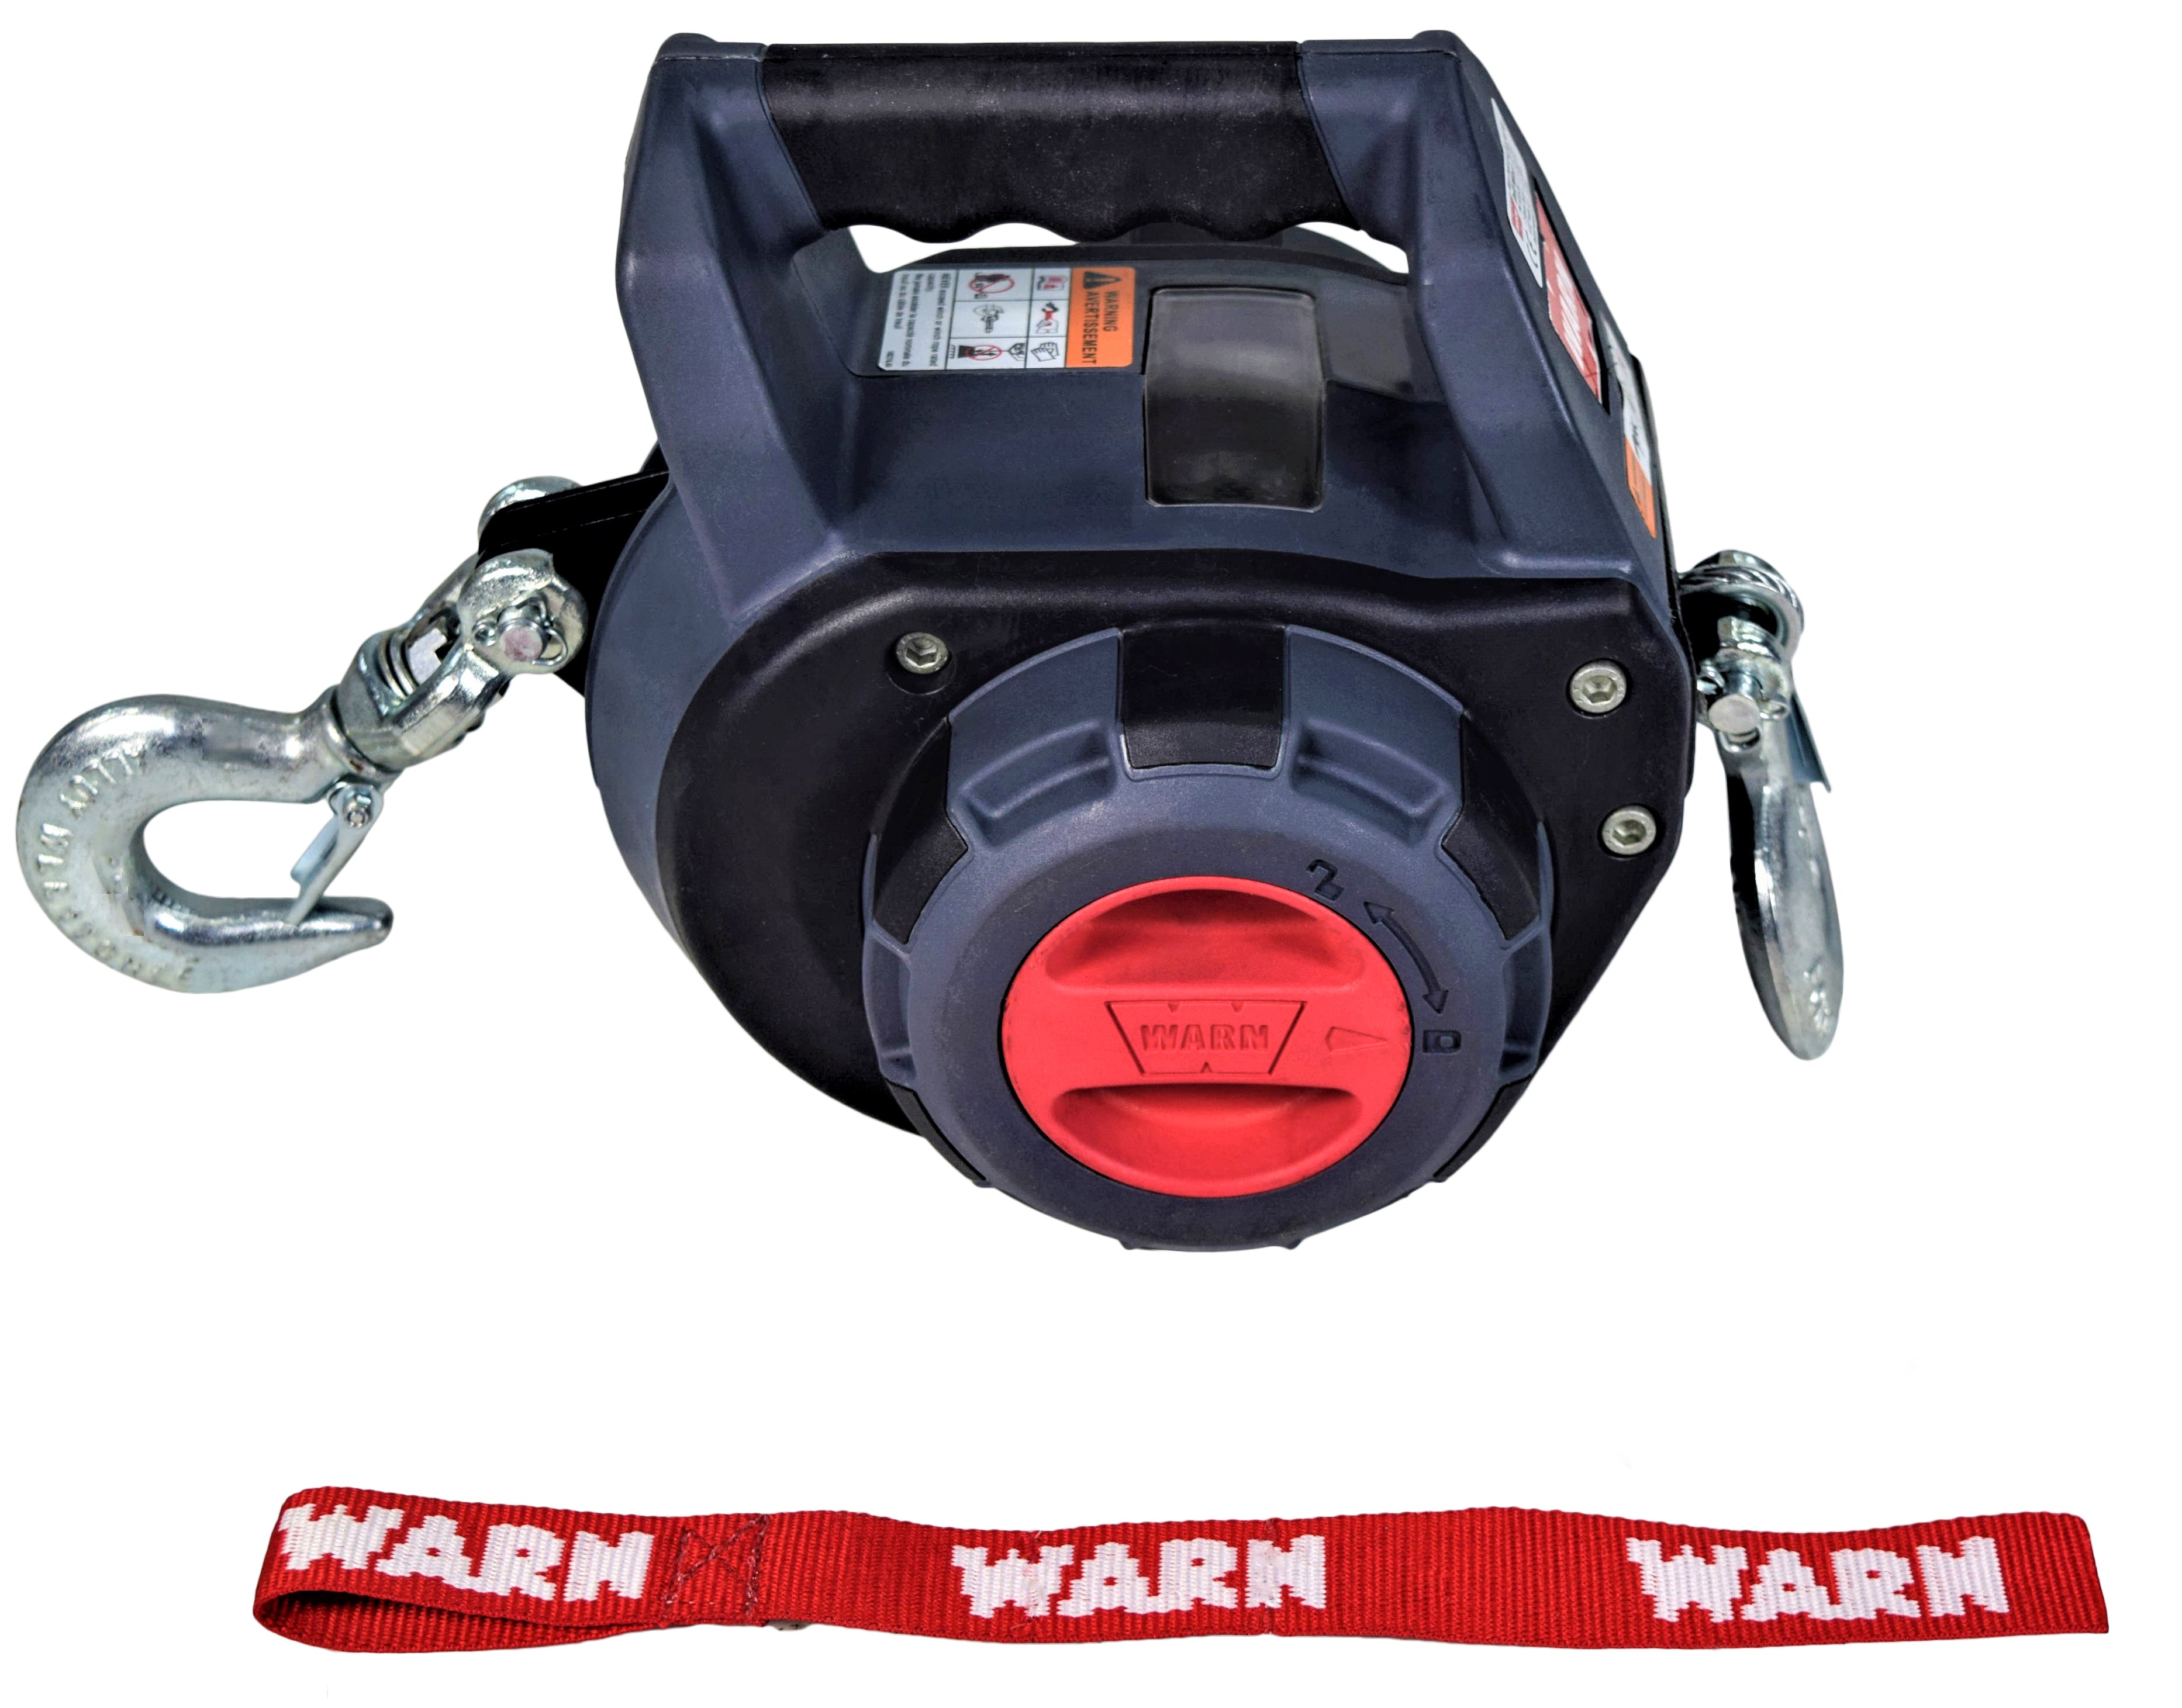 Warn-101570-Drill-Winch-750-lbs-Capacity-40-Steel-Rope-Free-spool-Clutch-image-1